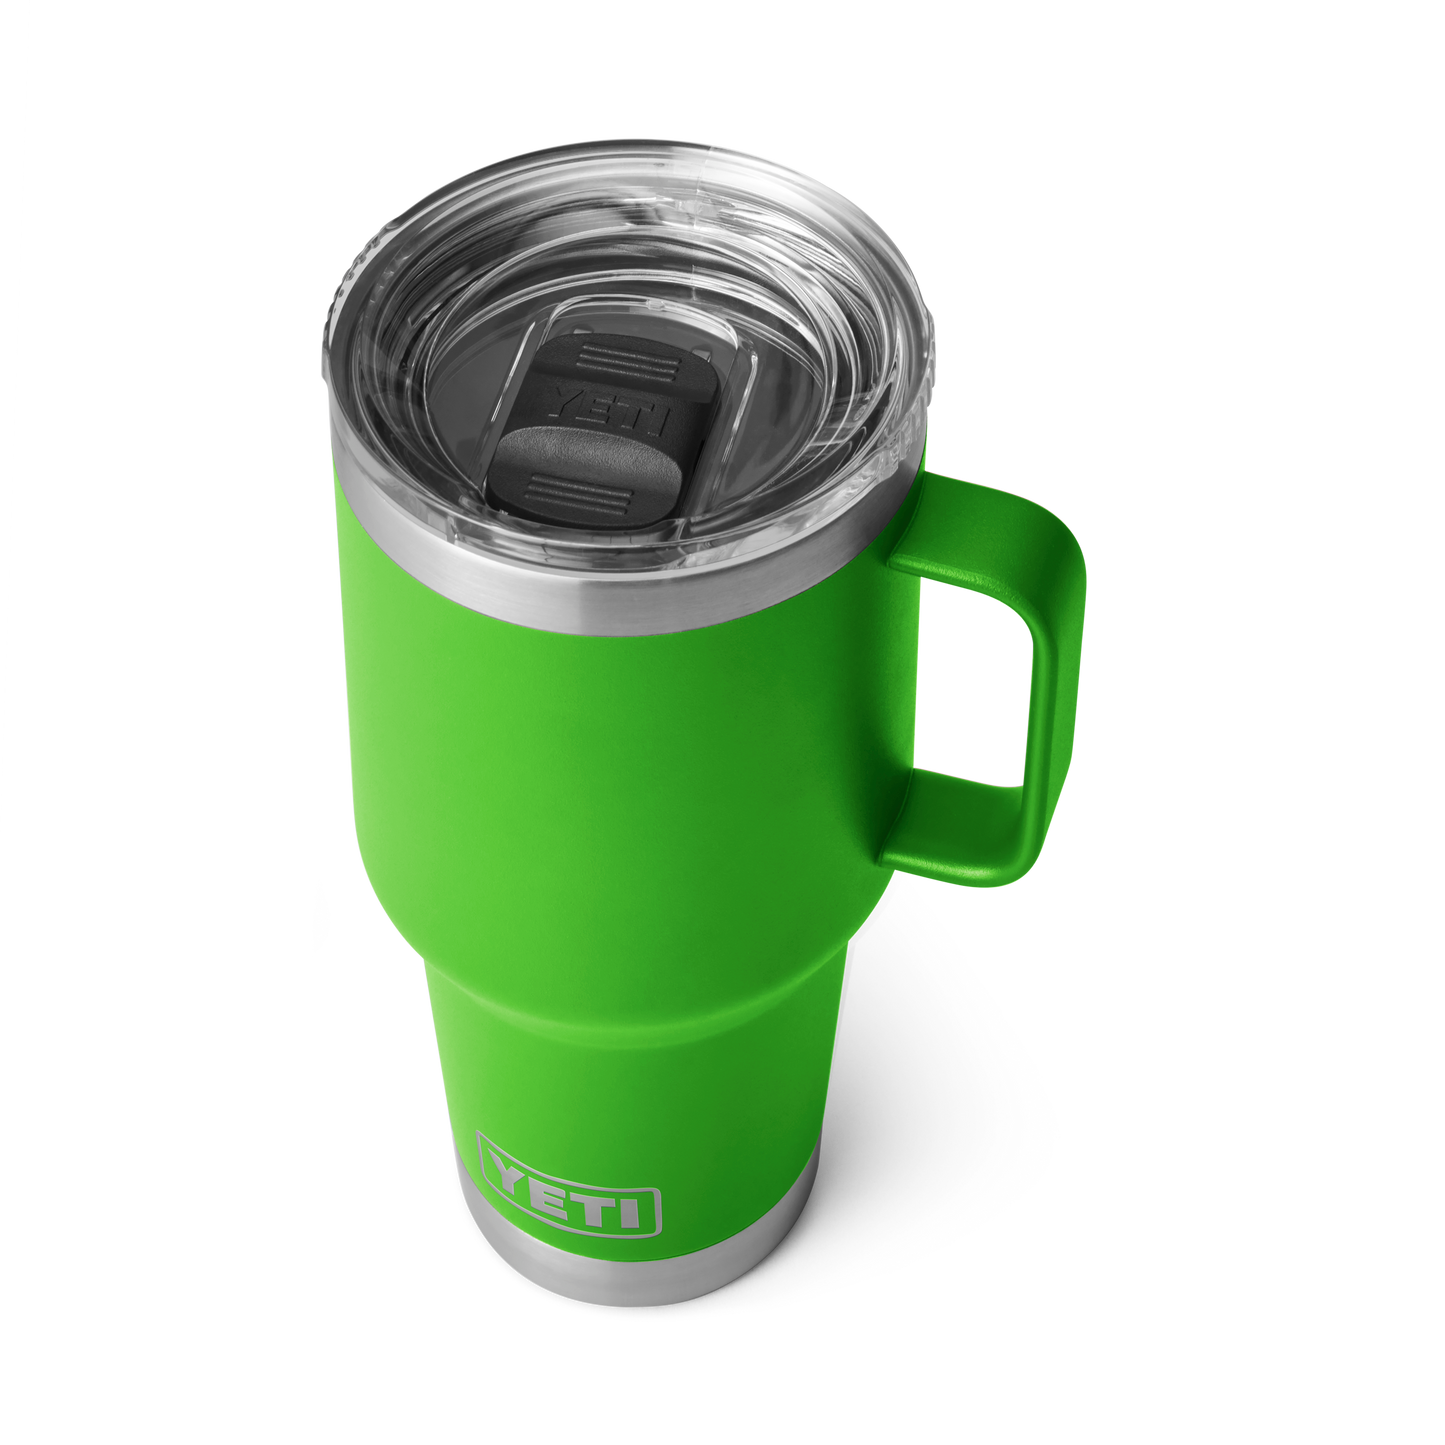 YETI Rambler® 30 oz (887 ml) Travel Mug Canopy Green